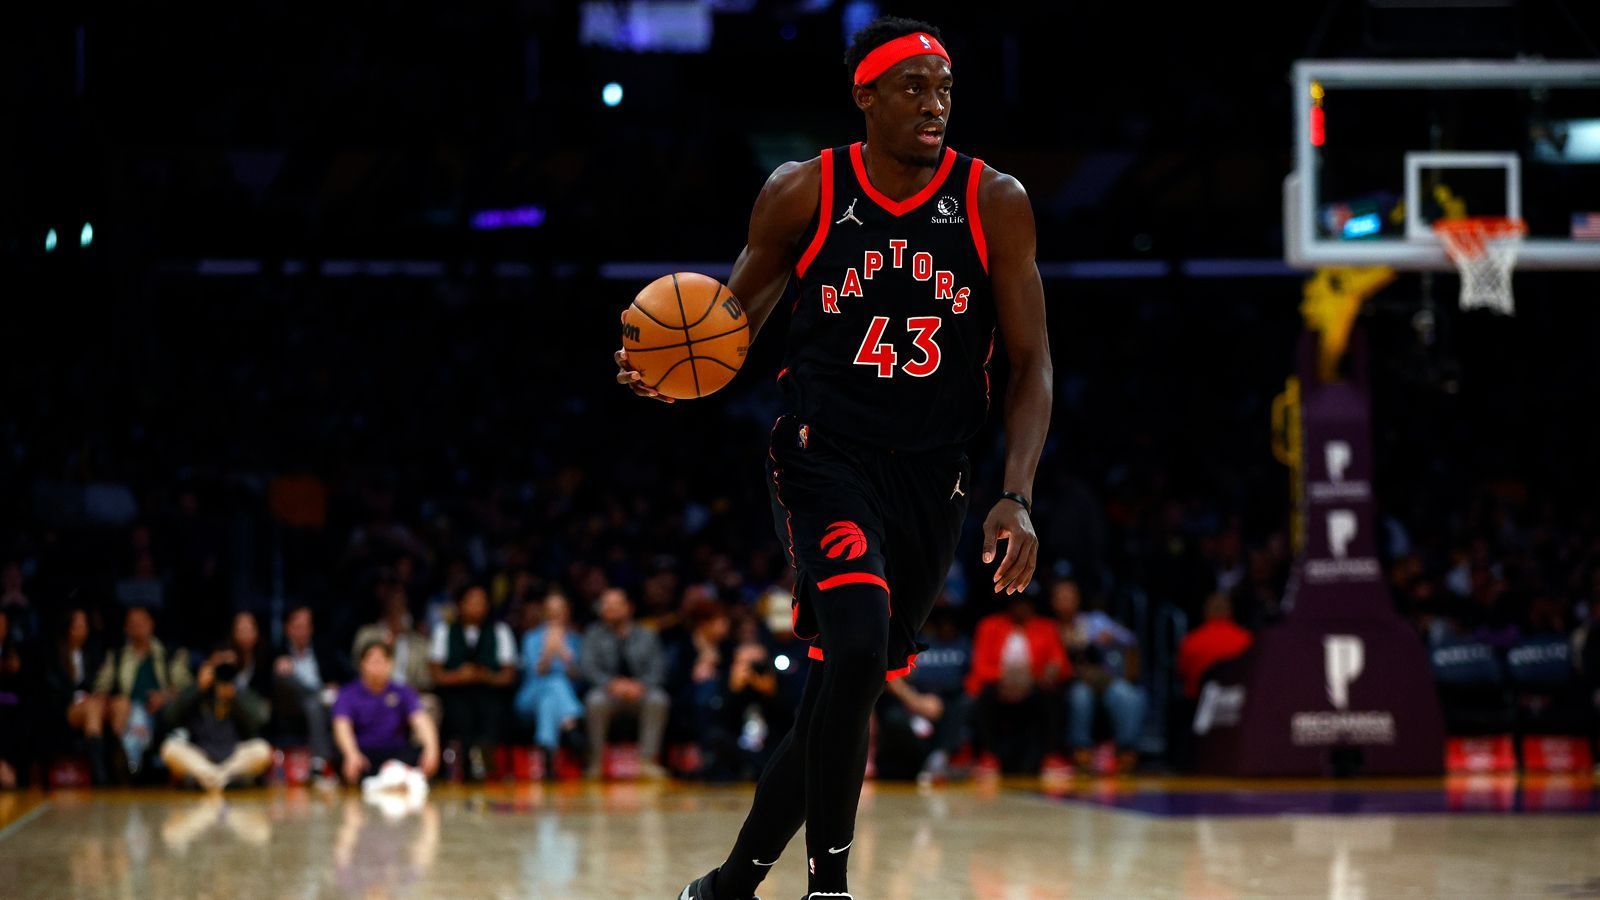 
                <strong>Toronto Raptors (Eastern Conference)</strong><br>
                &#x2022; Bilanz: 48-34 <br>&#x2022; Topscorer: Pascal Siakam mit 22,8 Punkten im Schnitt<br>&#x2022; NBA-Titel: 1 Titel (2019)<br>
              